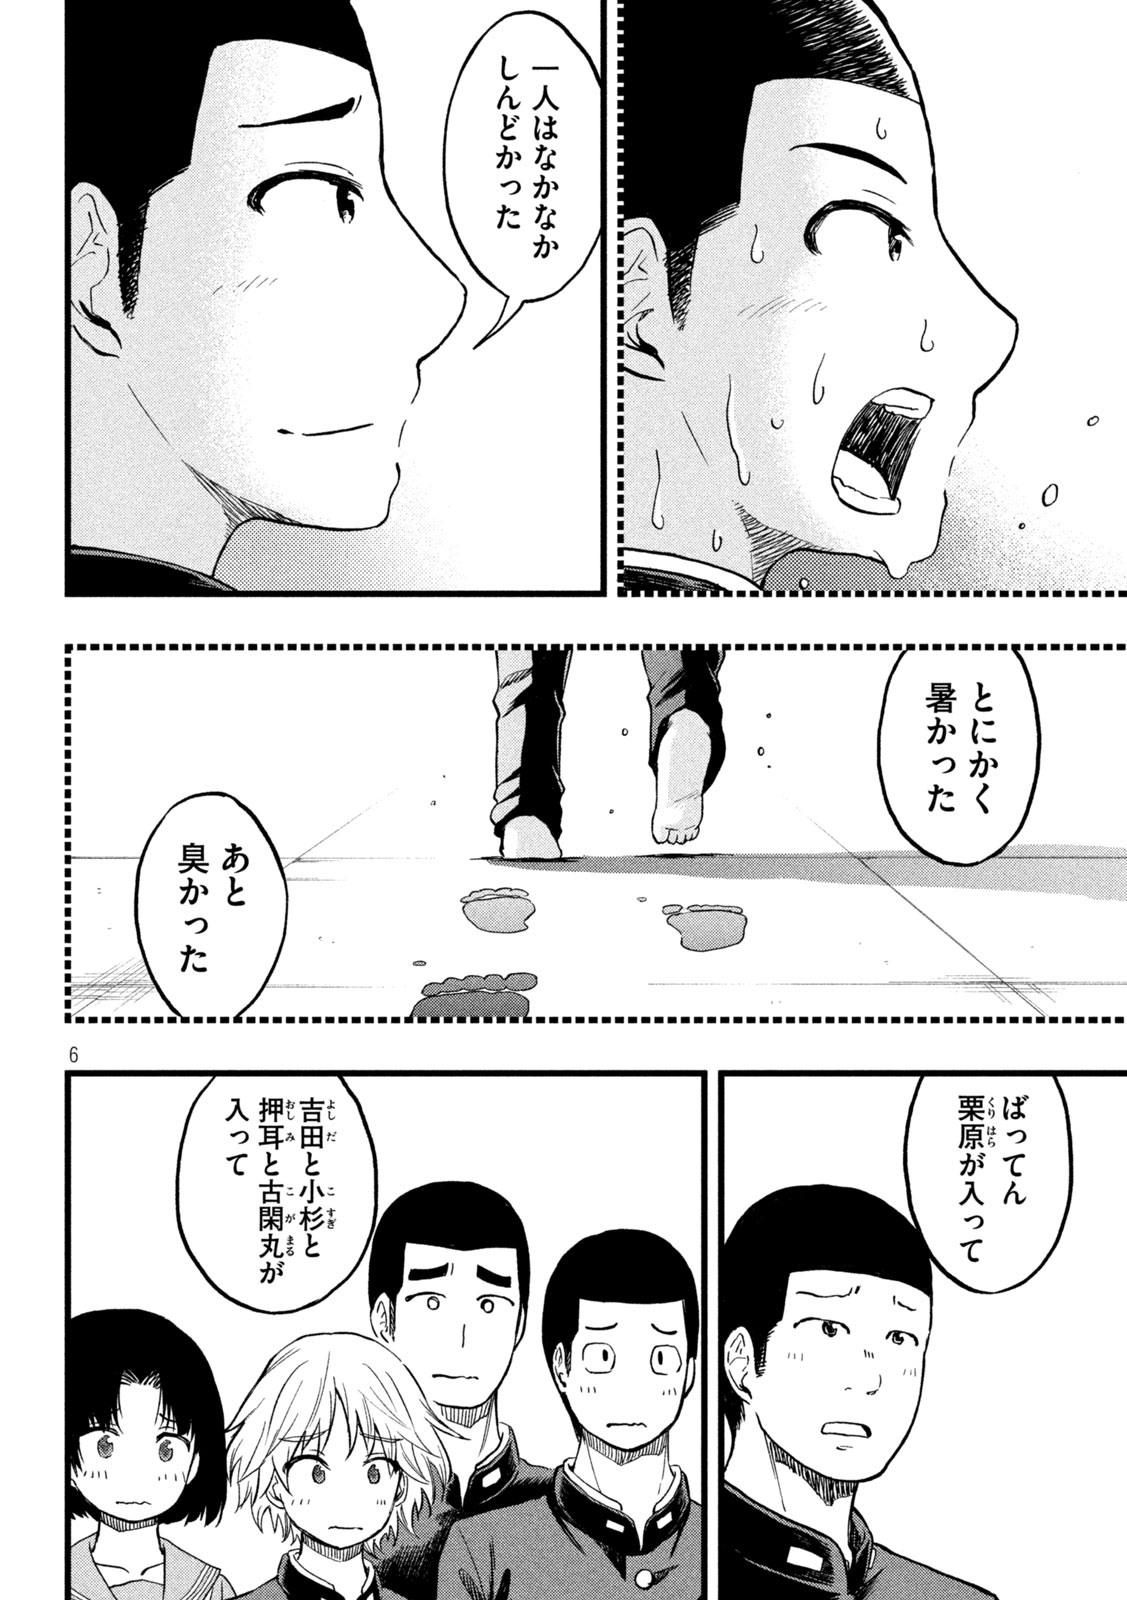 Koharu haru! - Chapter 44 - Page 2